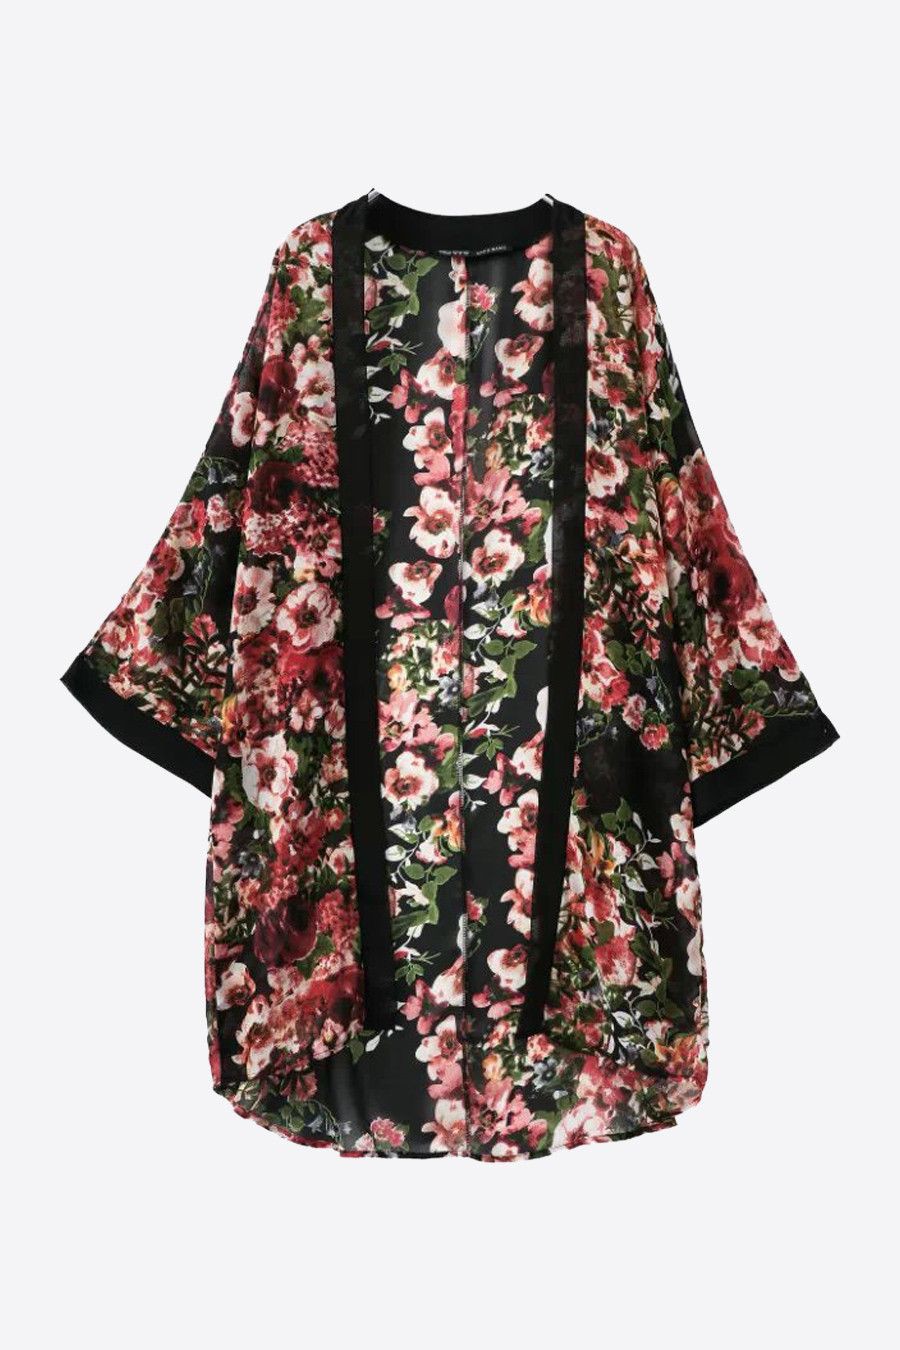 Floral chiffon kimono cardigan, Floral design: Floral design,  kimono outfits,  Floral-Print Kimono,  Casual Outfits  